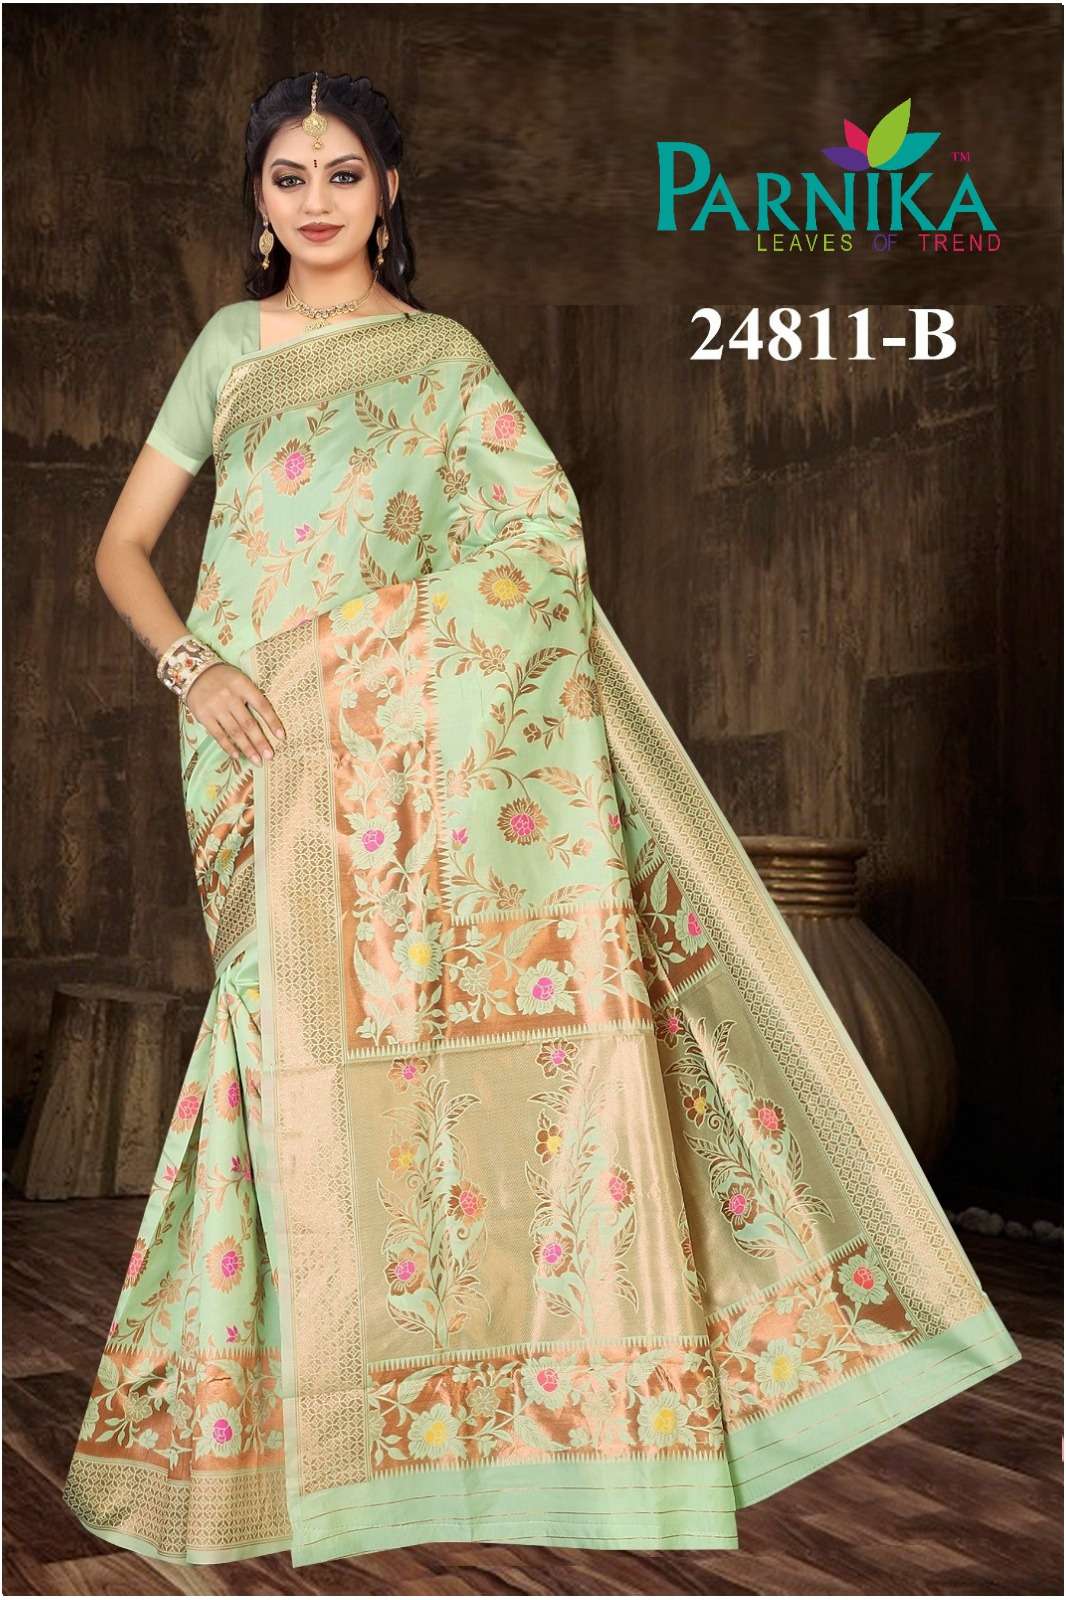 Parnika India Lichi Silk Jacquard Sarees Festive Wear Wedding Saree in Wholesale rate - 24811